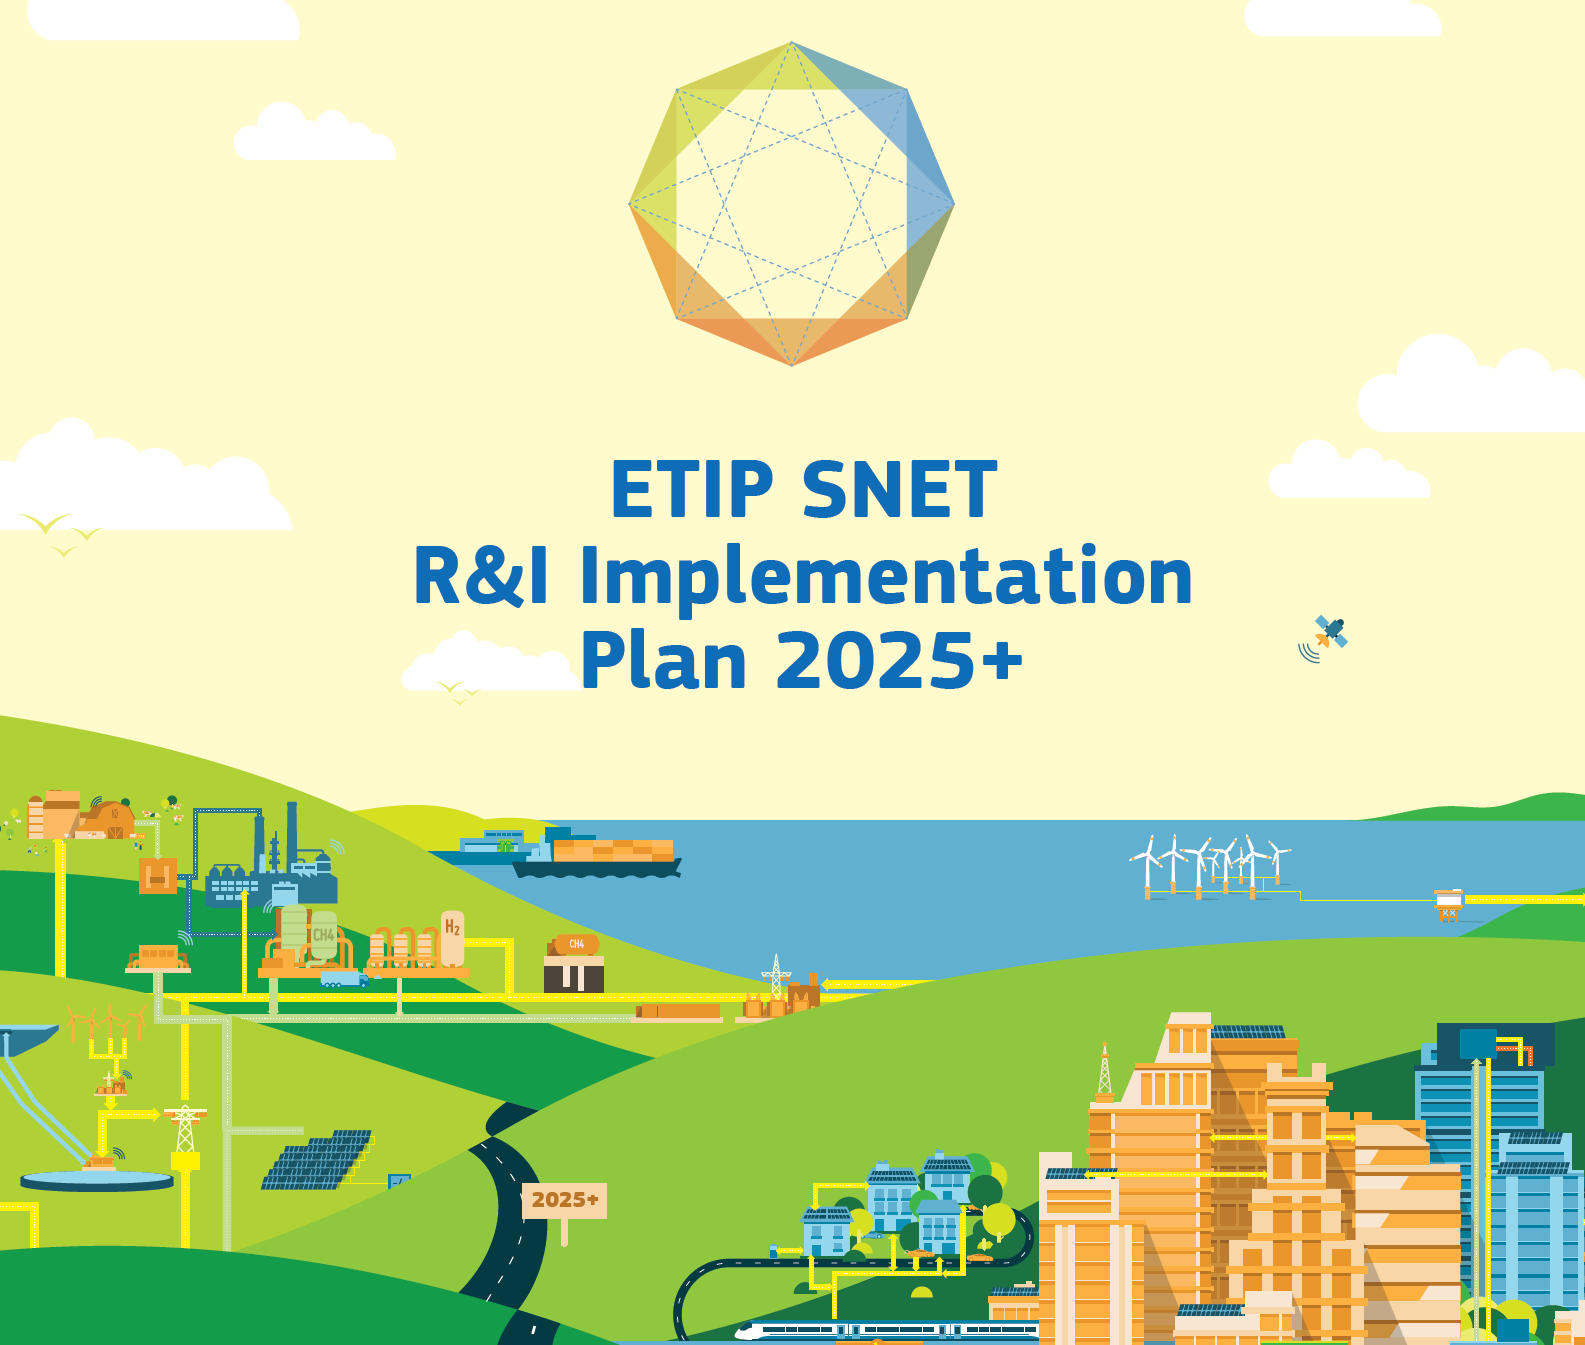  ETIP SNET R&I Implementation Plan 2025+